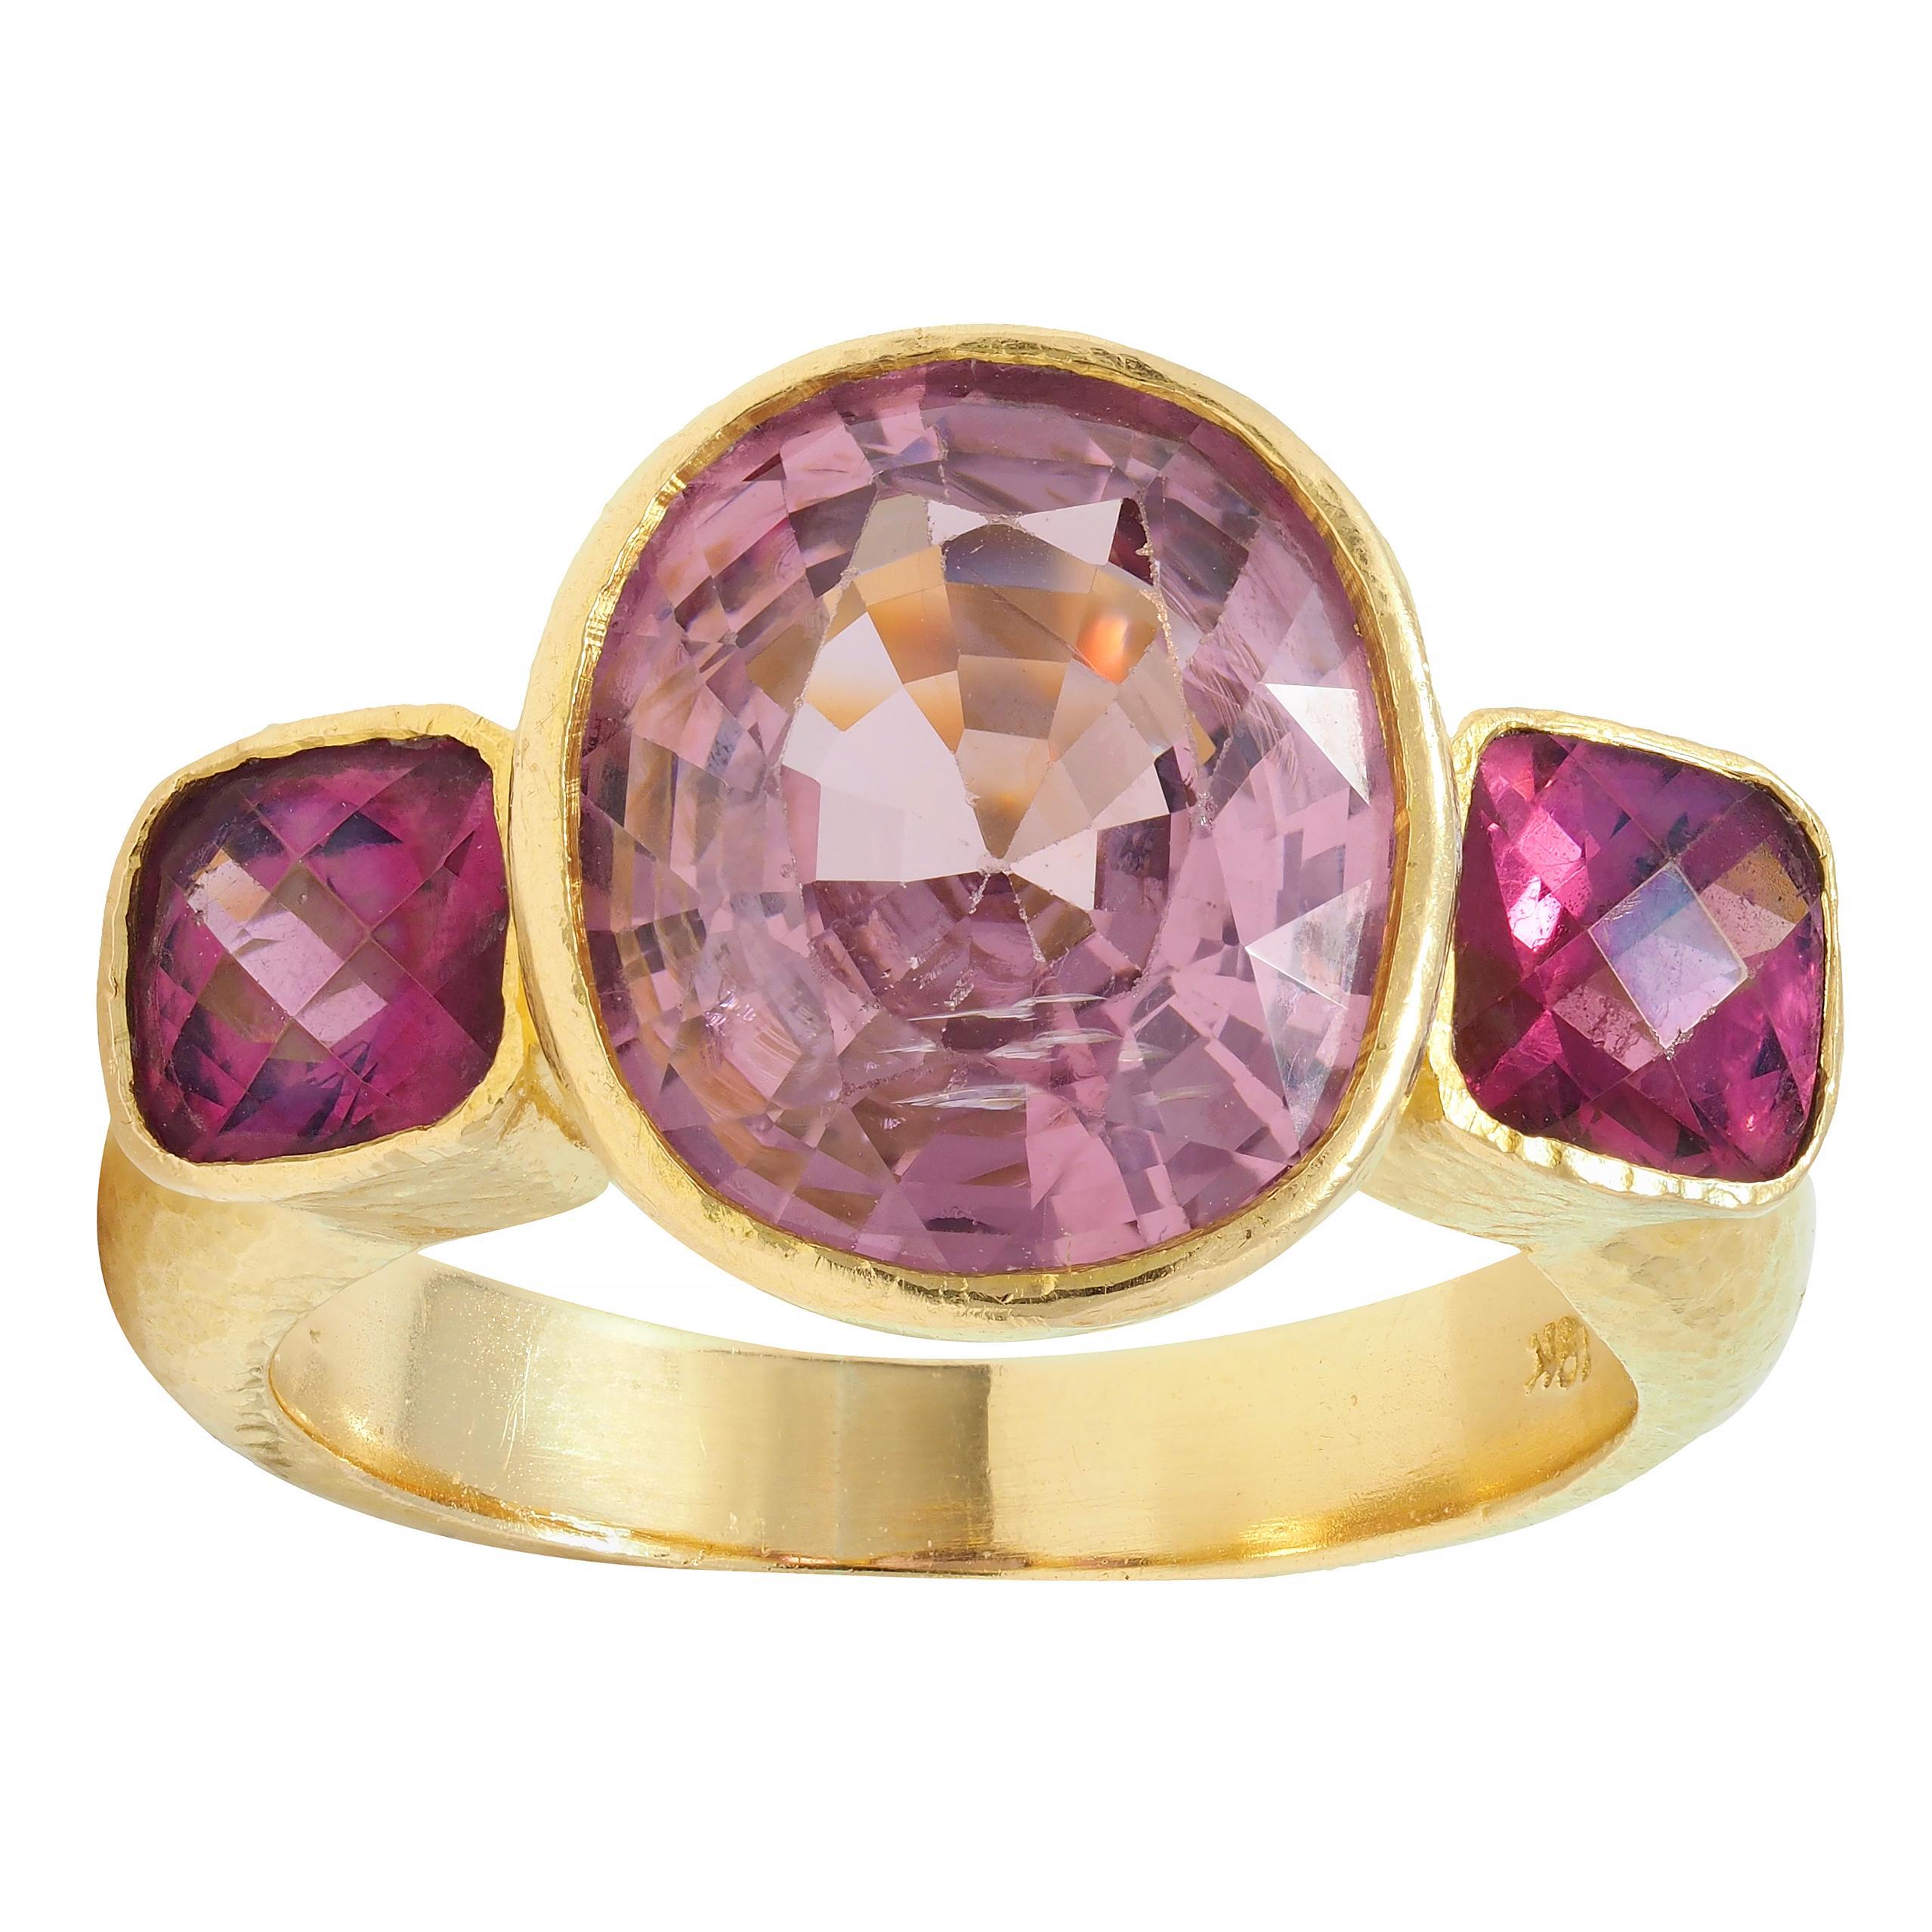 Elizabeth Locke Spinel Rhodolite Garnet 19 Karat Hammered Gold Gemstone Ring For Sale 6